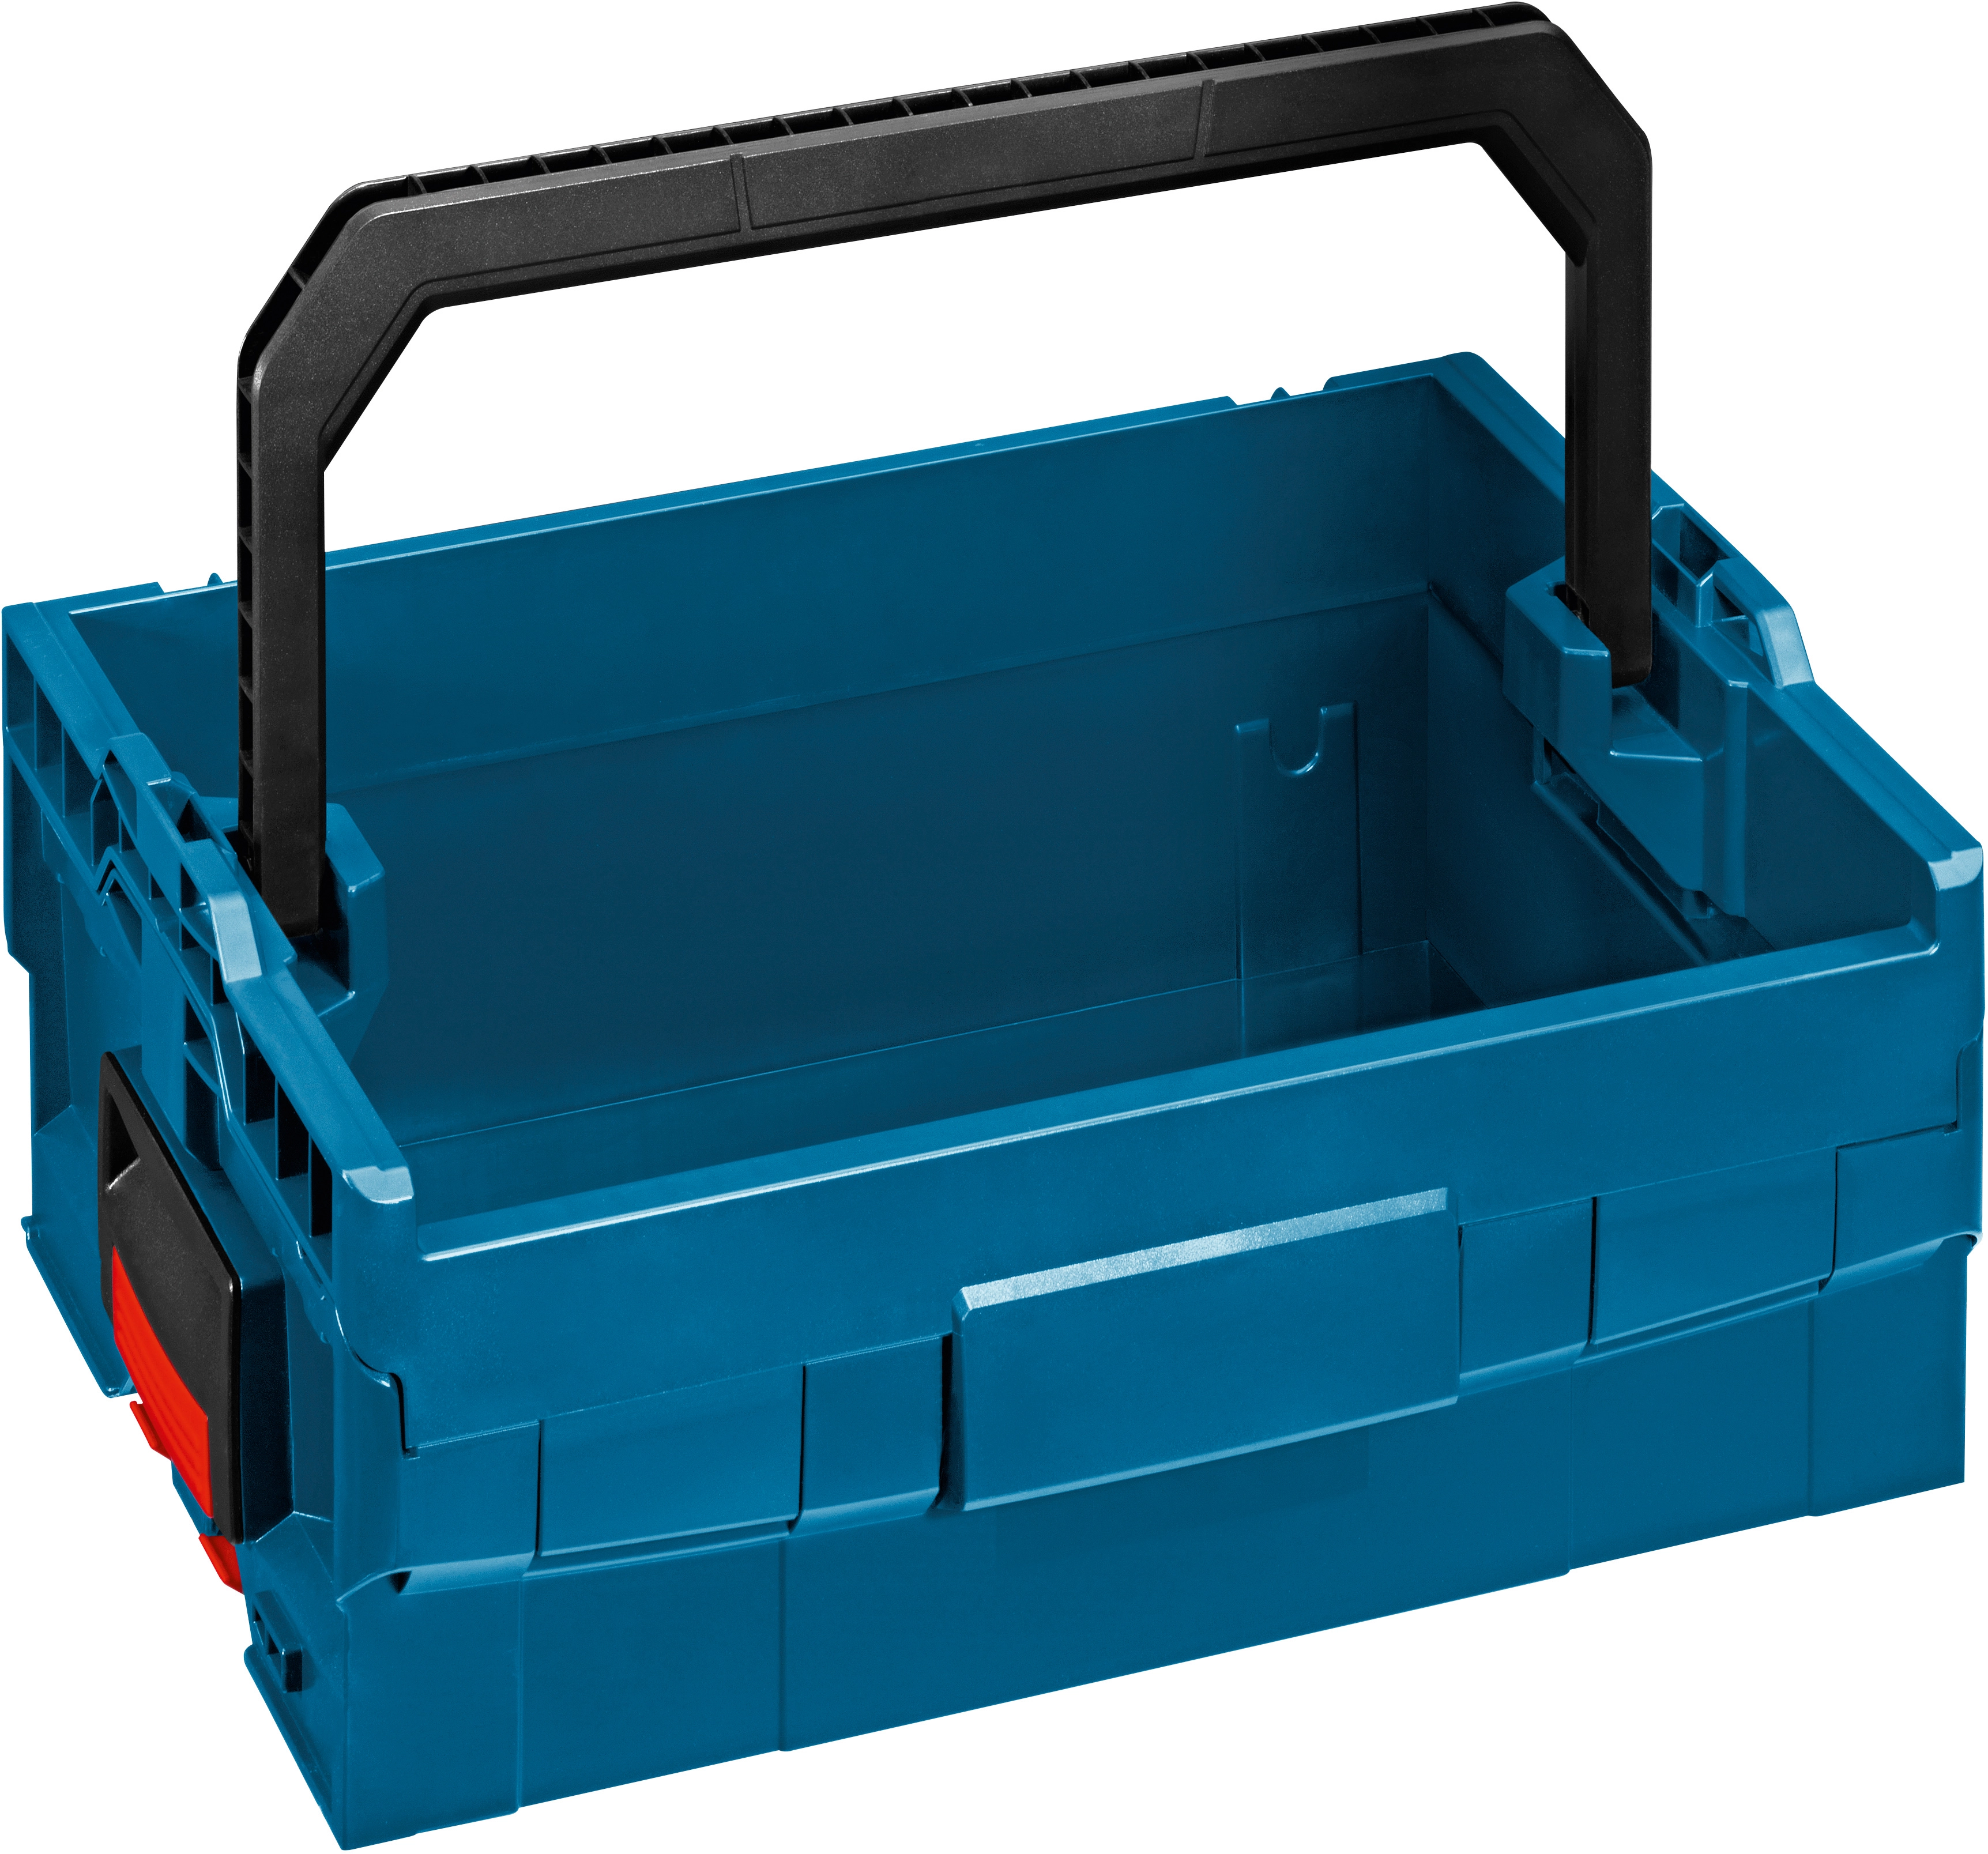 LT-Boxx Professional Bosch kaufen 170 Werkzeugbox OBI bei MobilitySystem